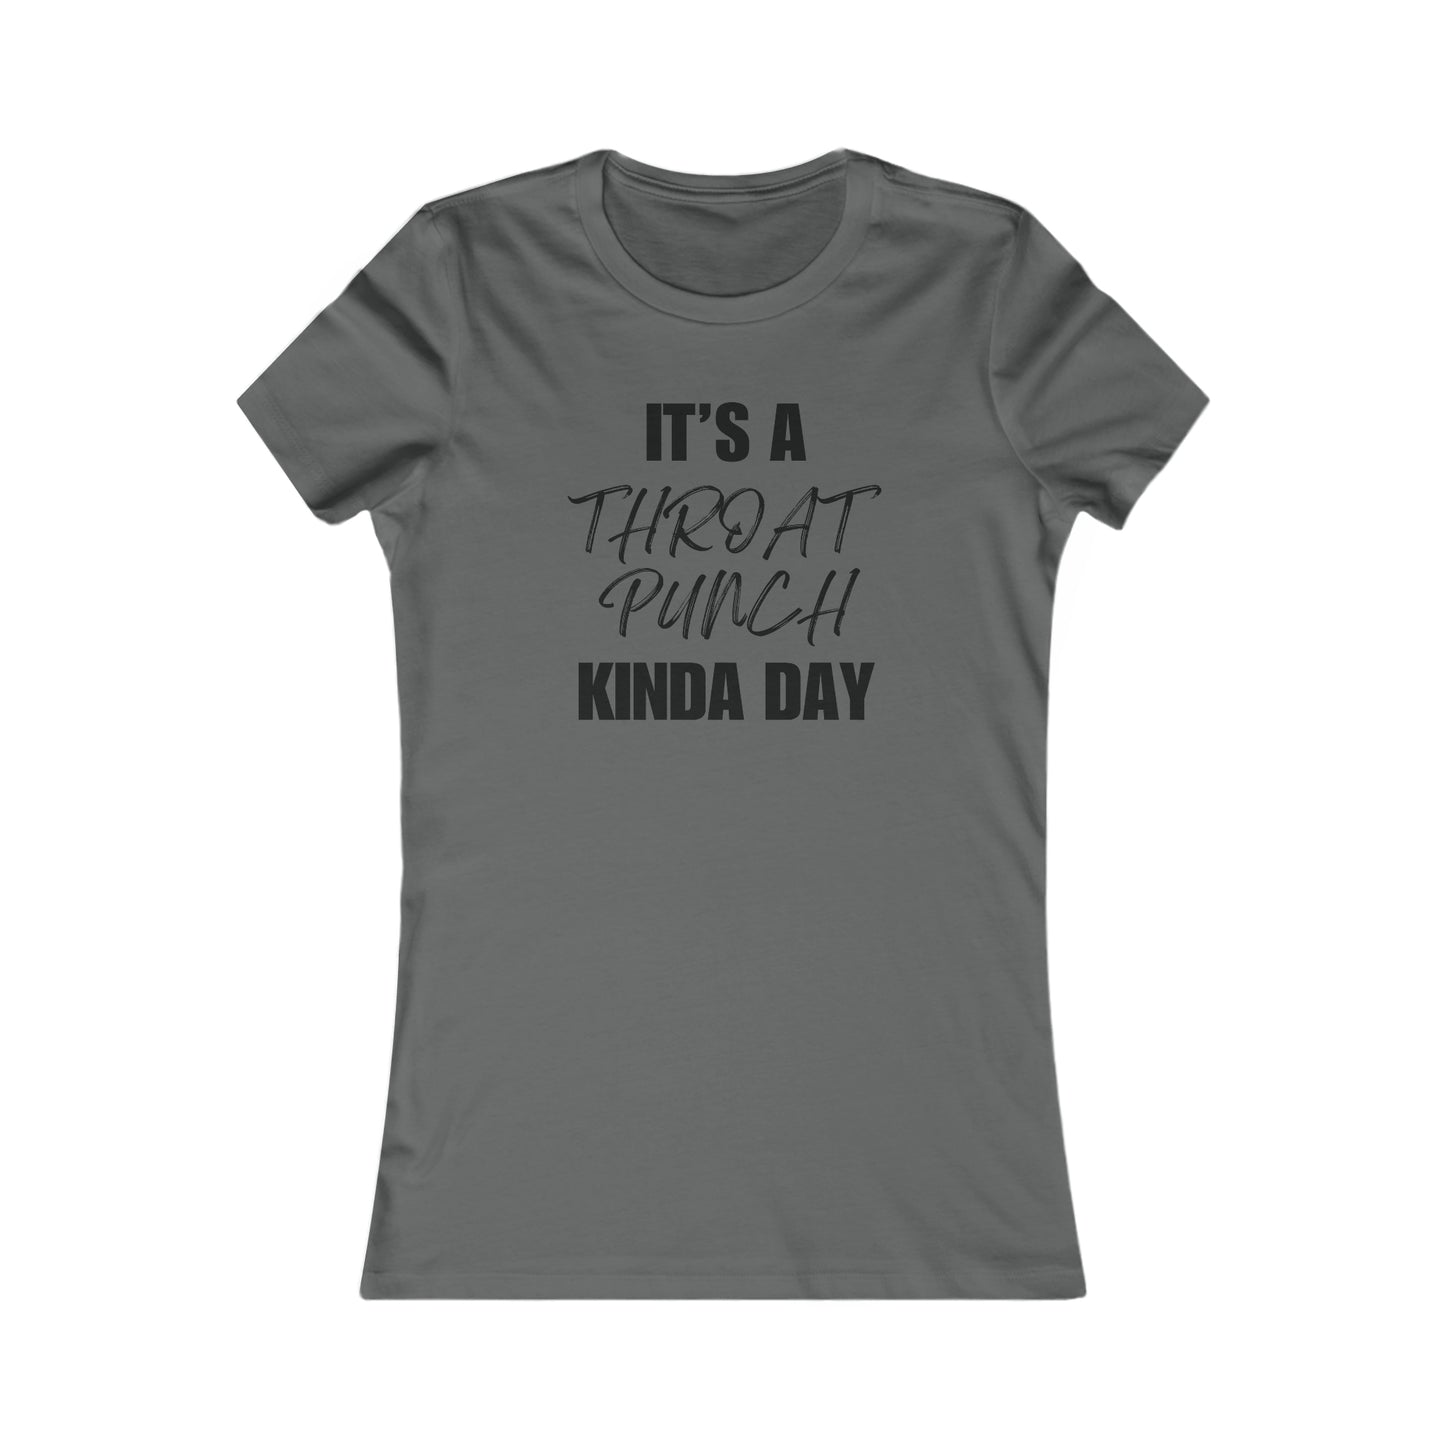 It’s A Throat Punch Kinda Day - Women's Favorite Tee